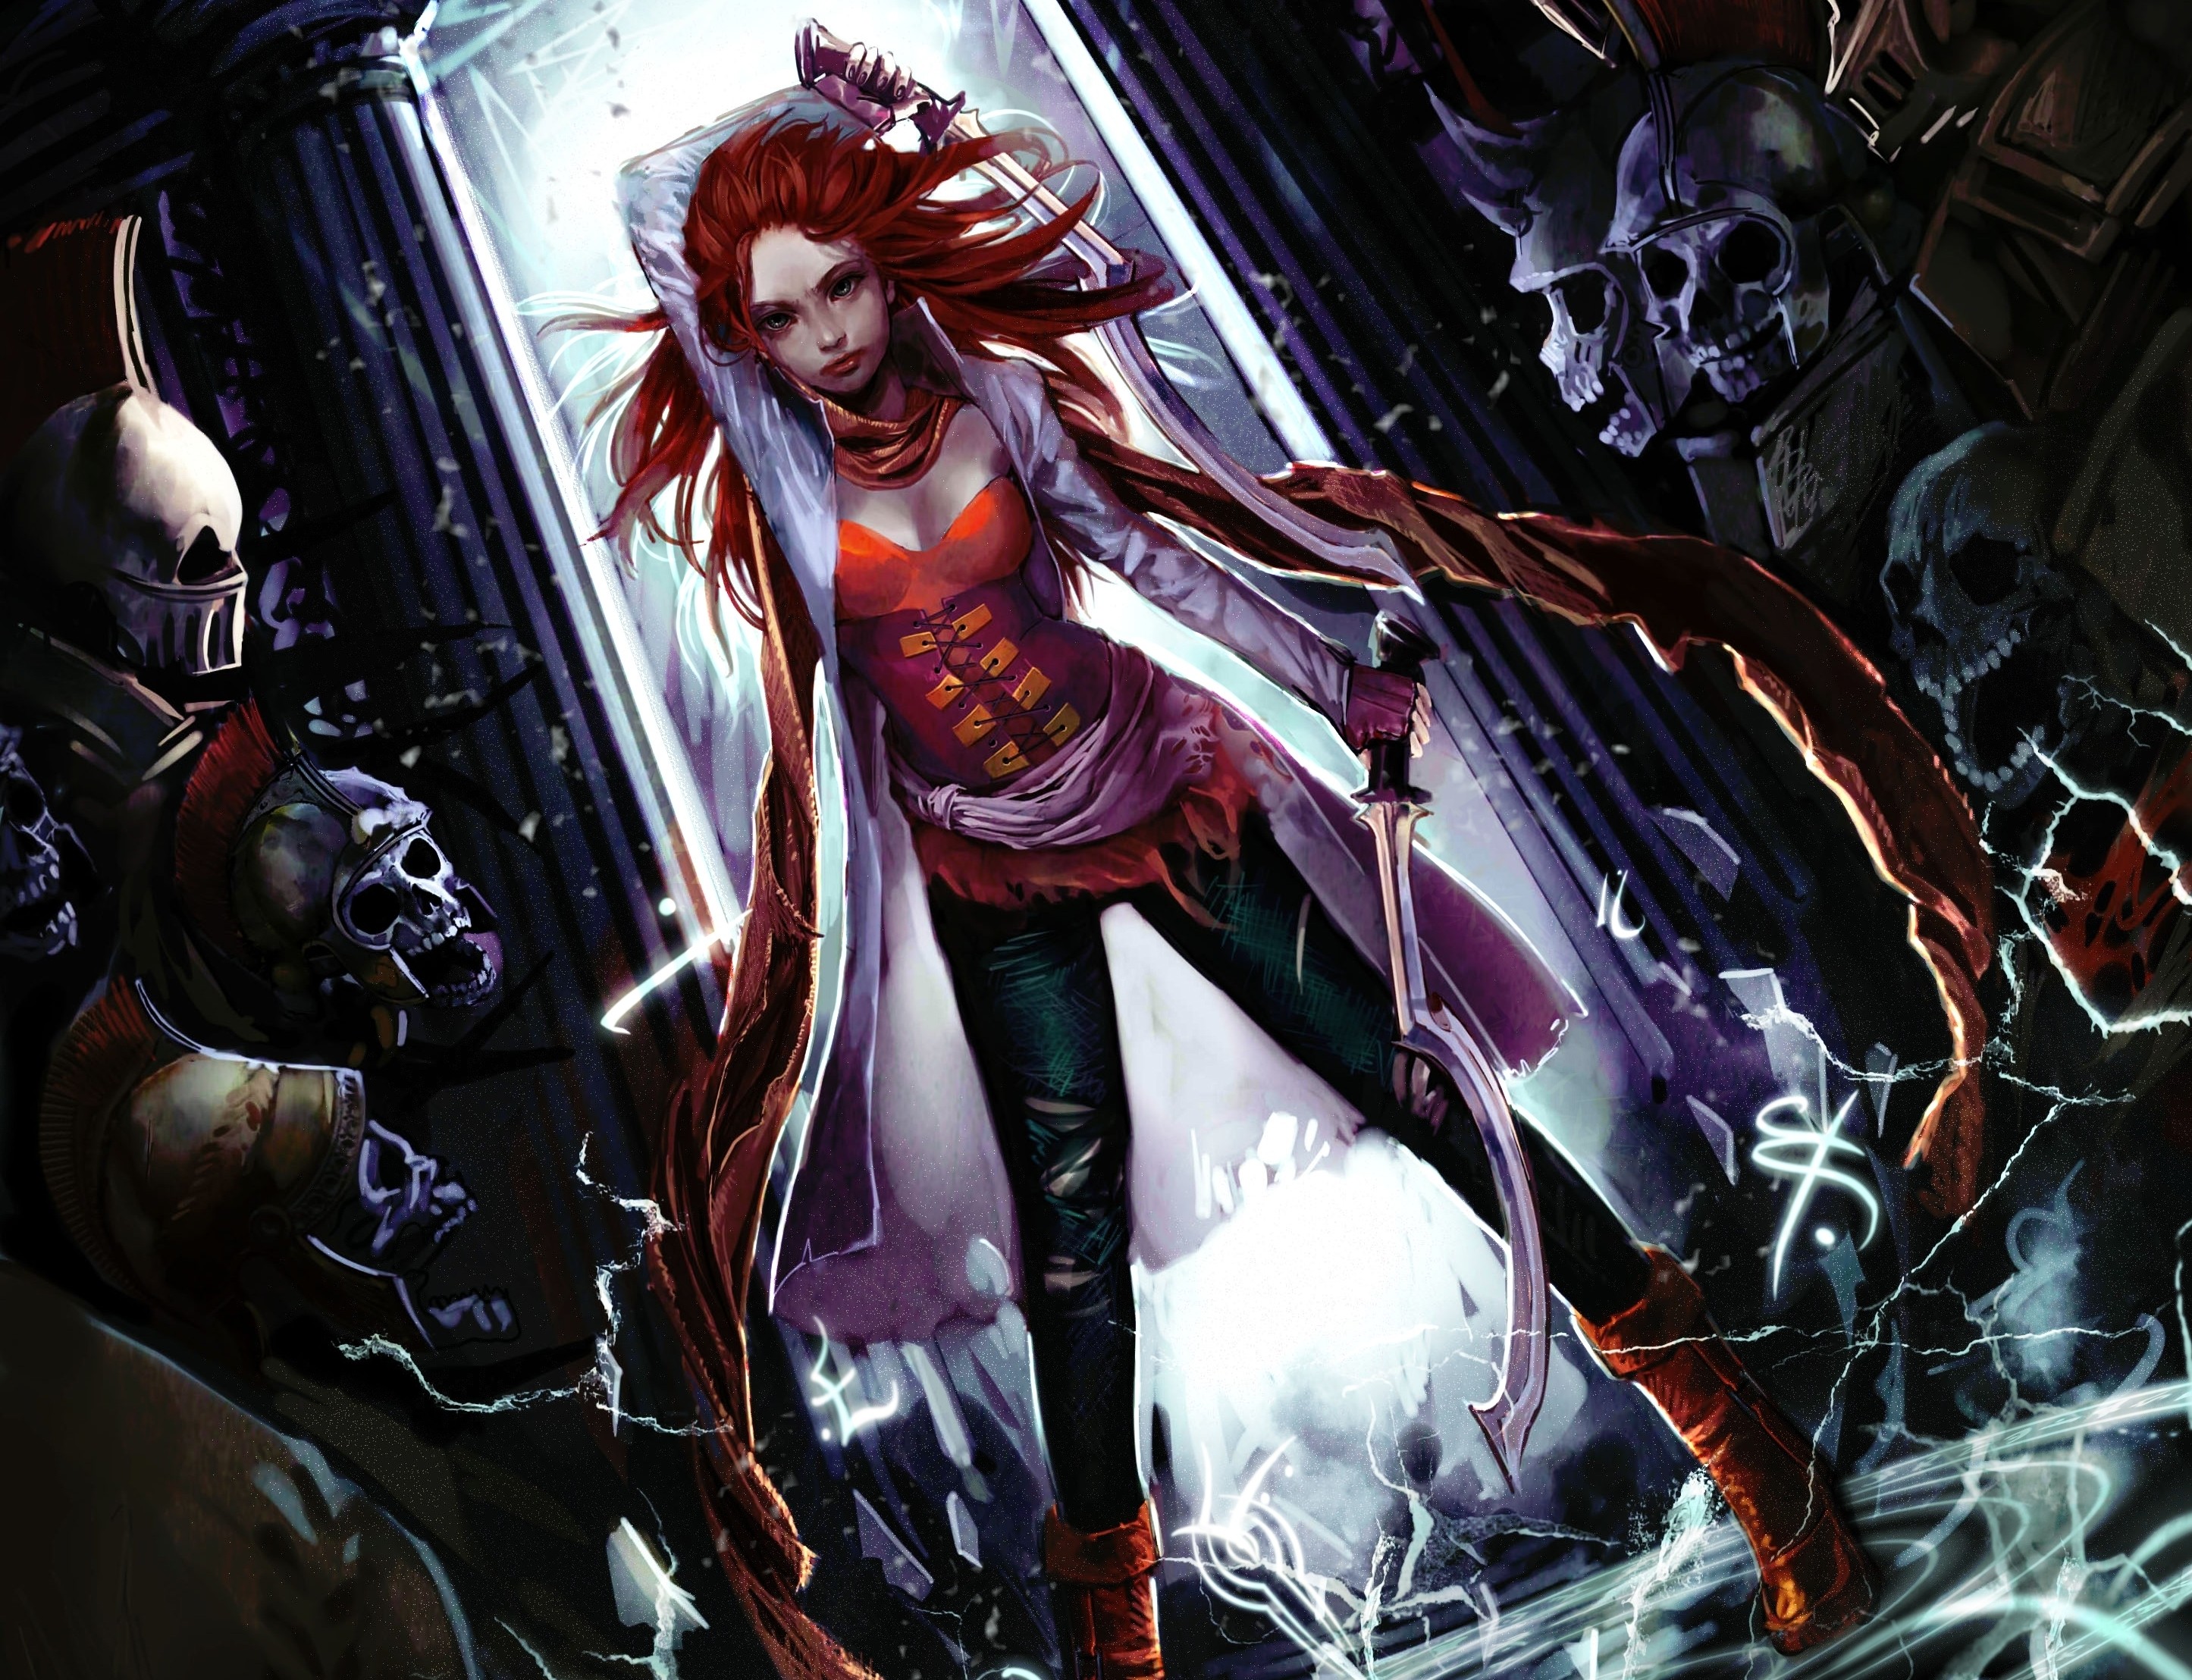 General 2891x2216 warrior fantasy art women artwork women with swords redhead weapon sword long hair skull